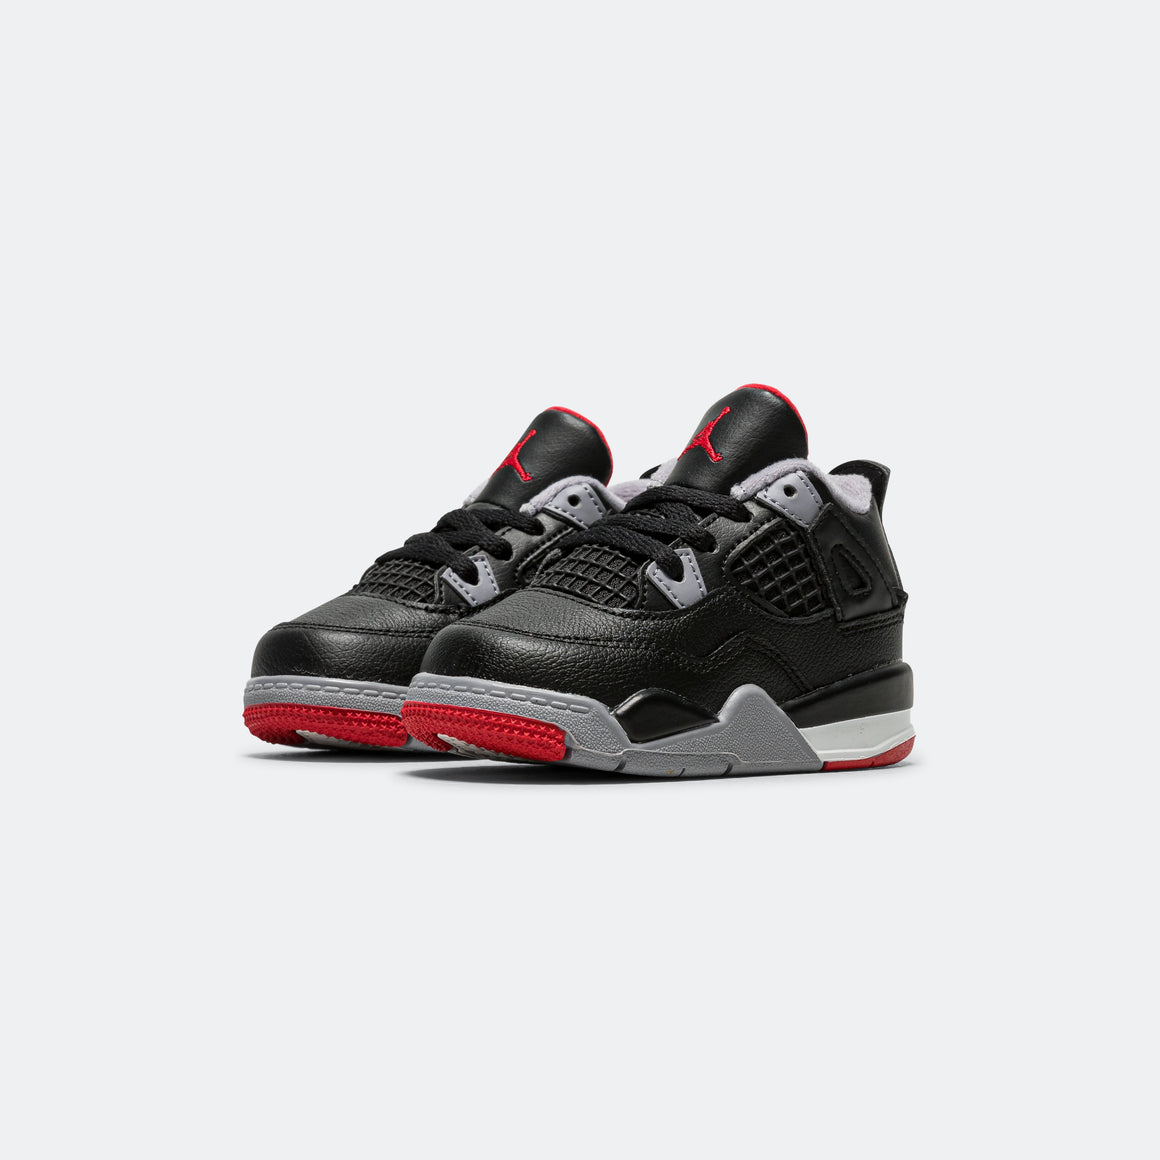 Jordan - Air Jordan 4 Retro (TD) - Black/Fire-Red Cement Grey - UP THERE